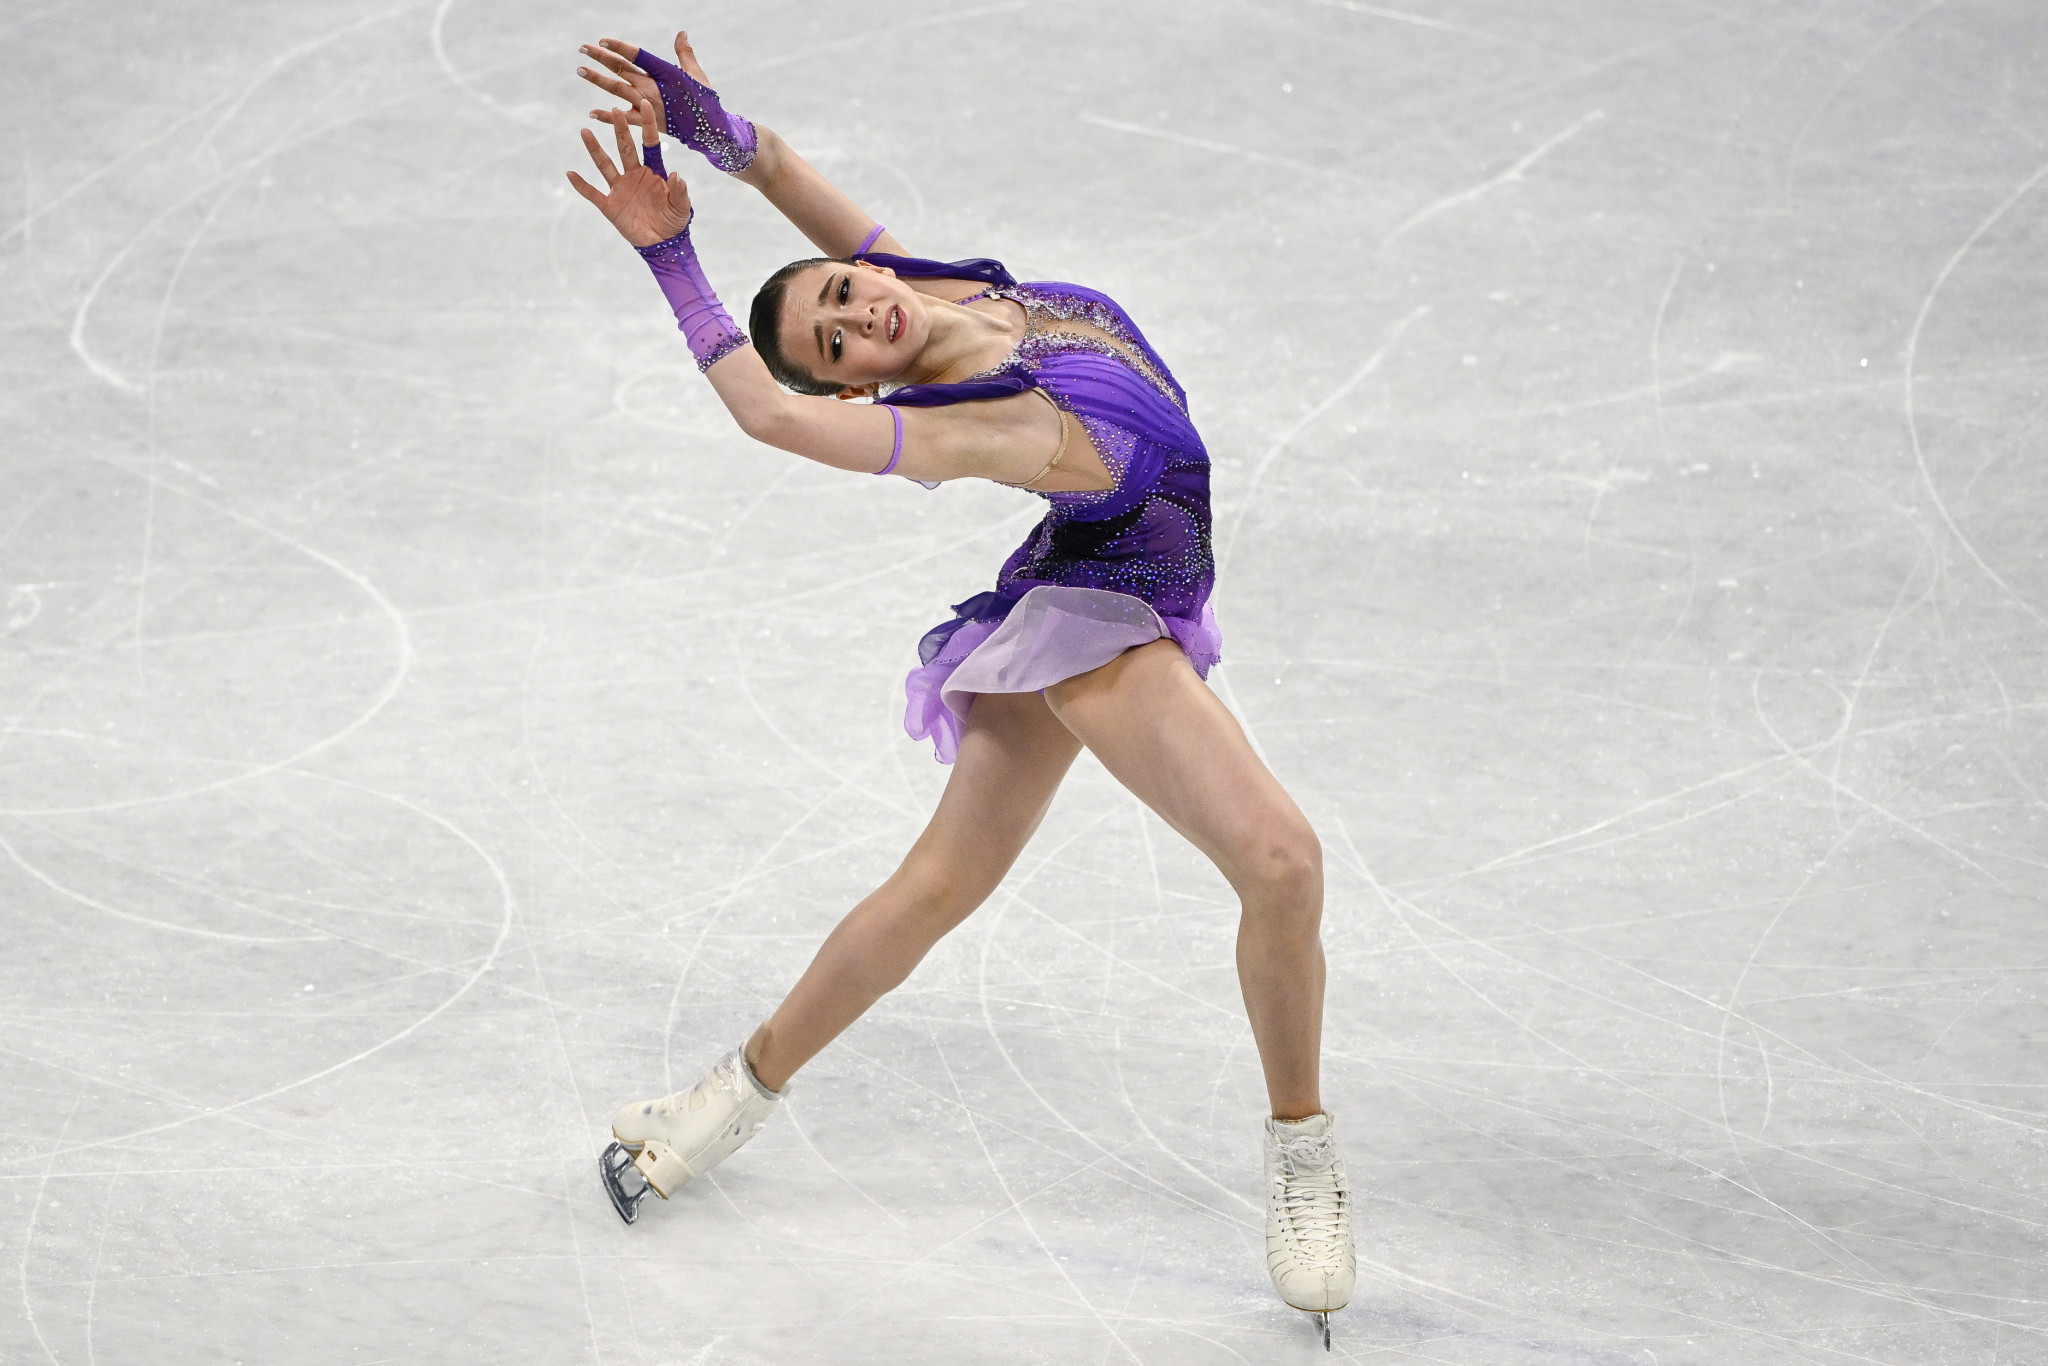 Valieva impresses on figure skating return at Channel One Cup